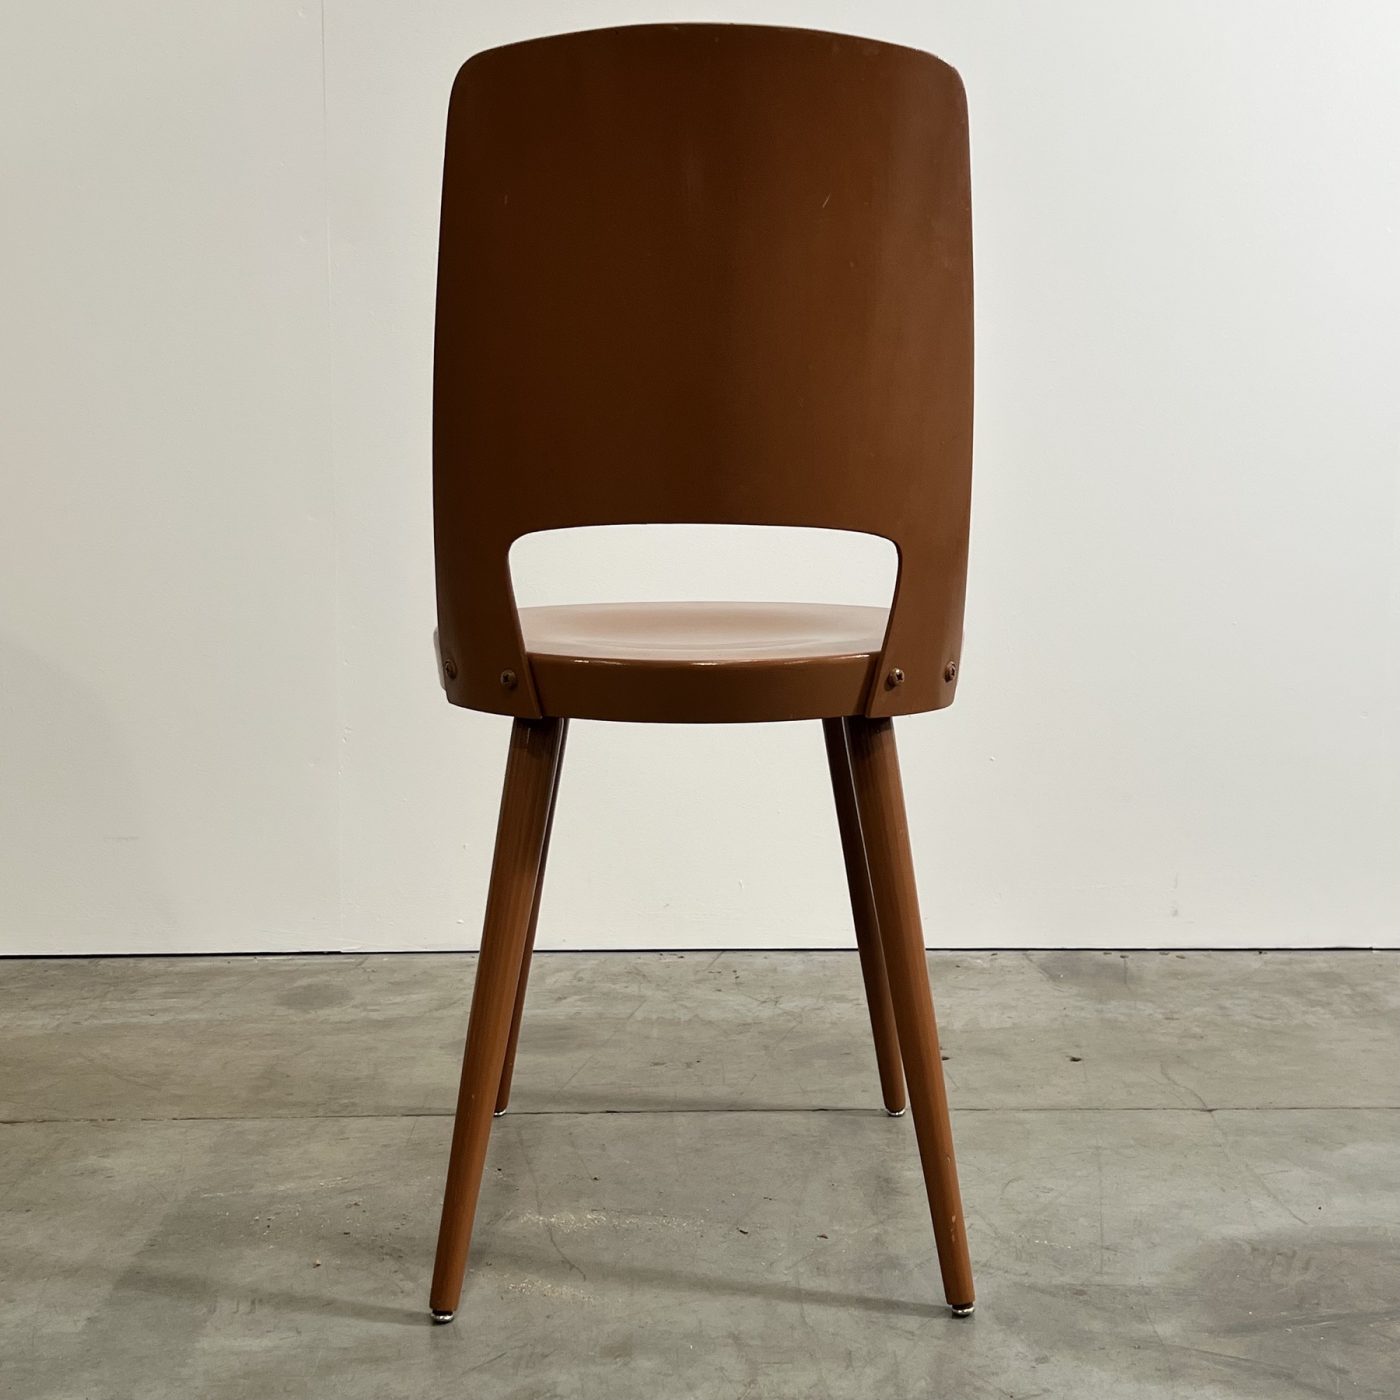 objet-vagabond-baumann-chairs0002